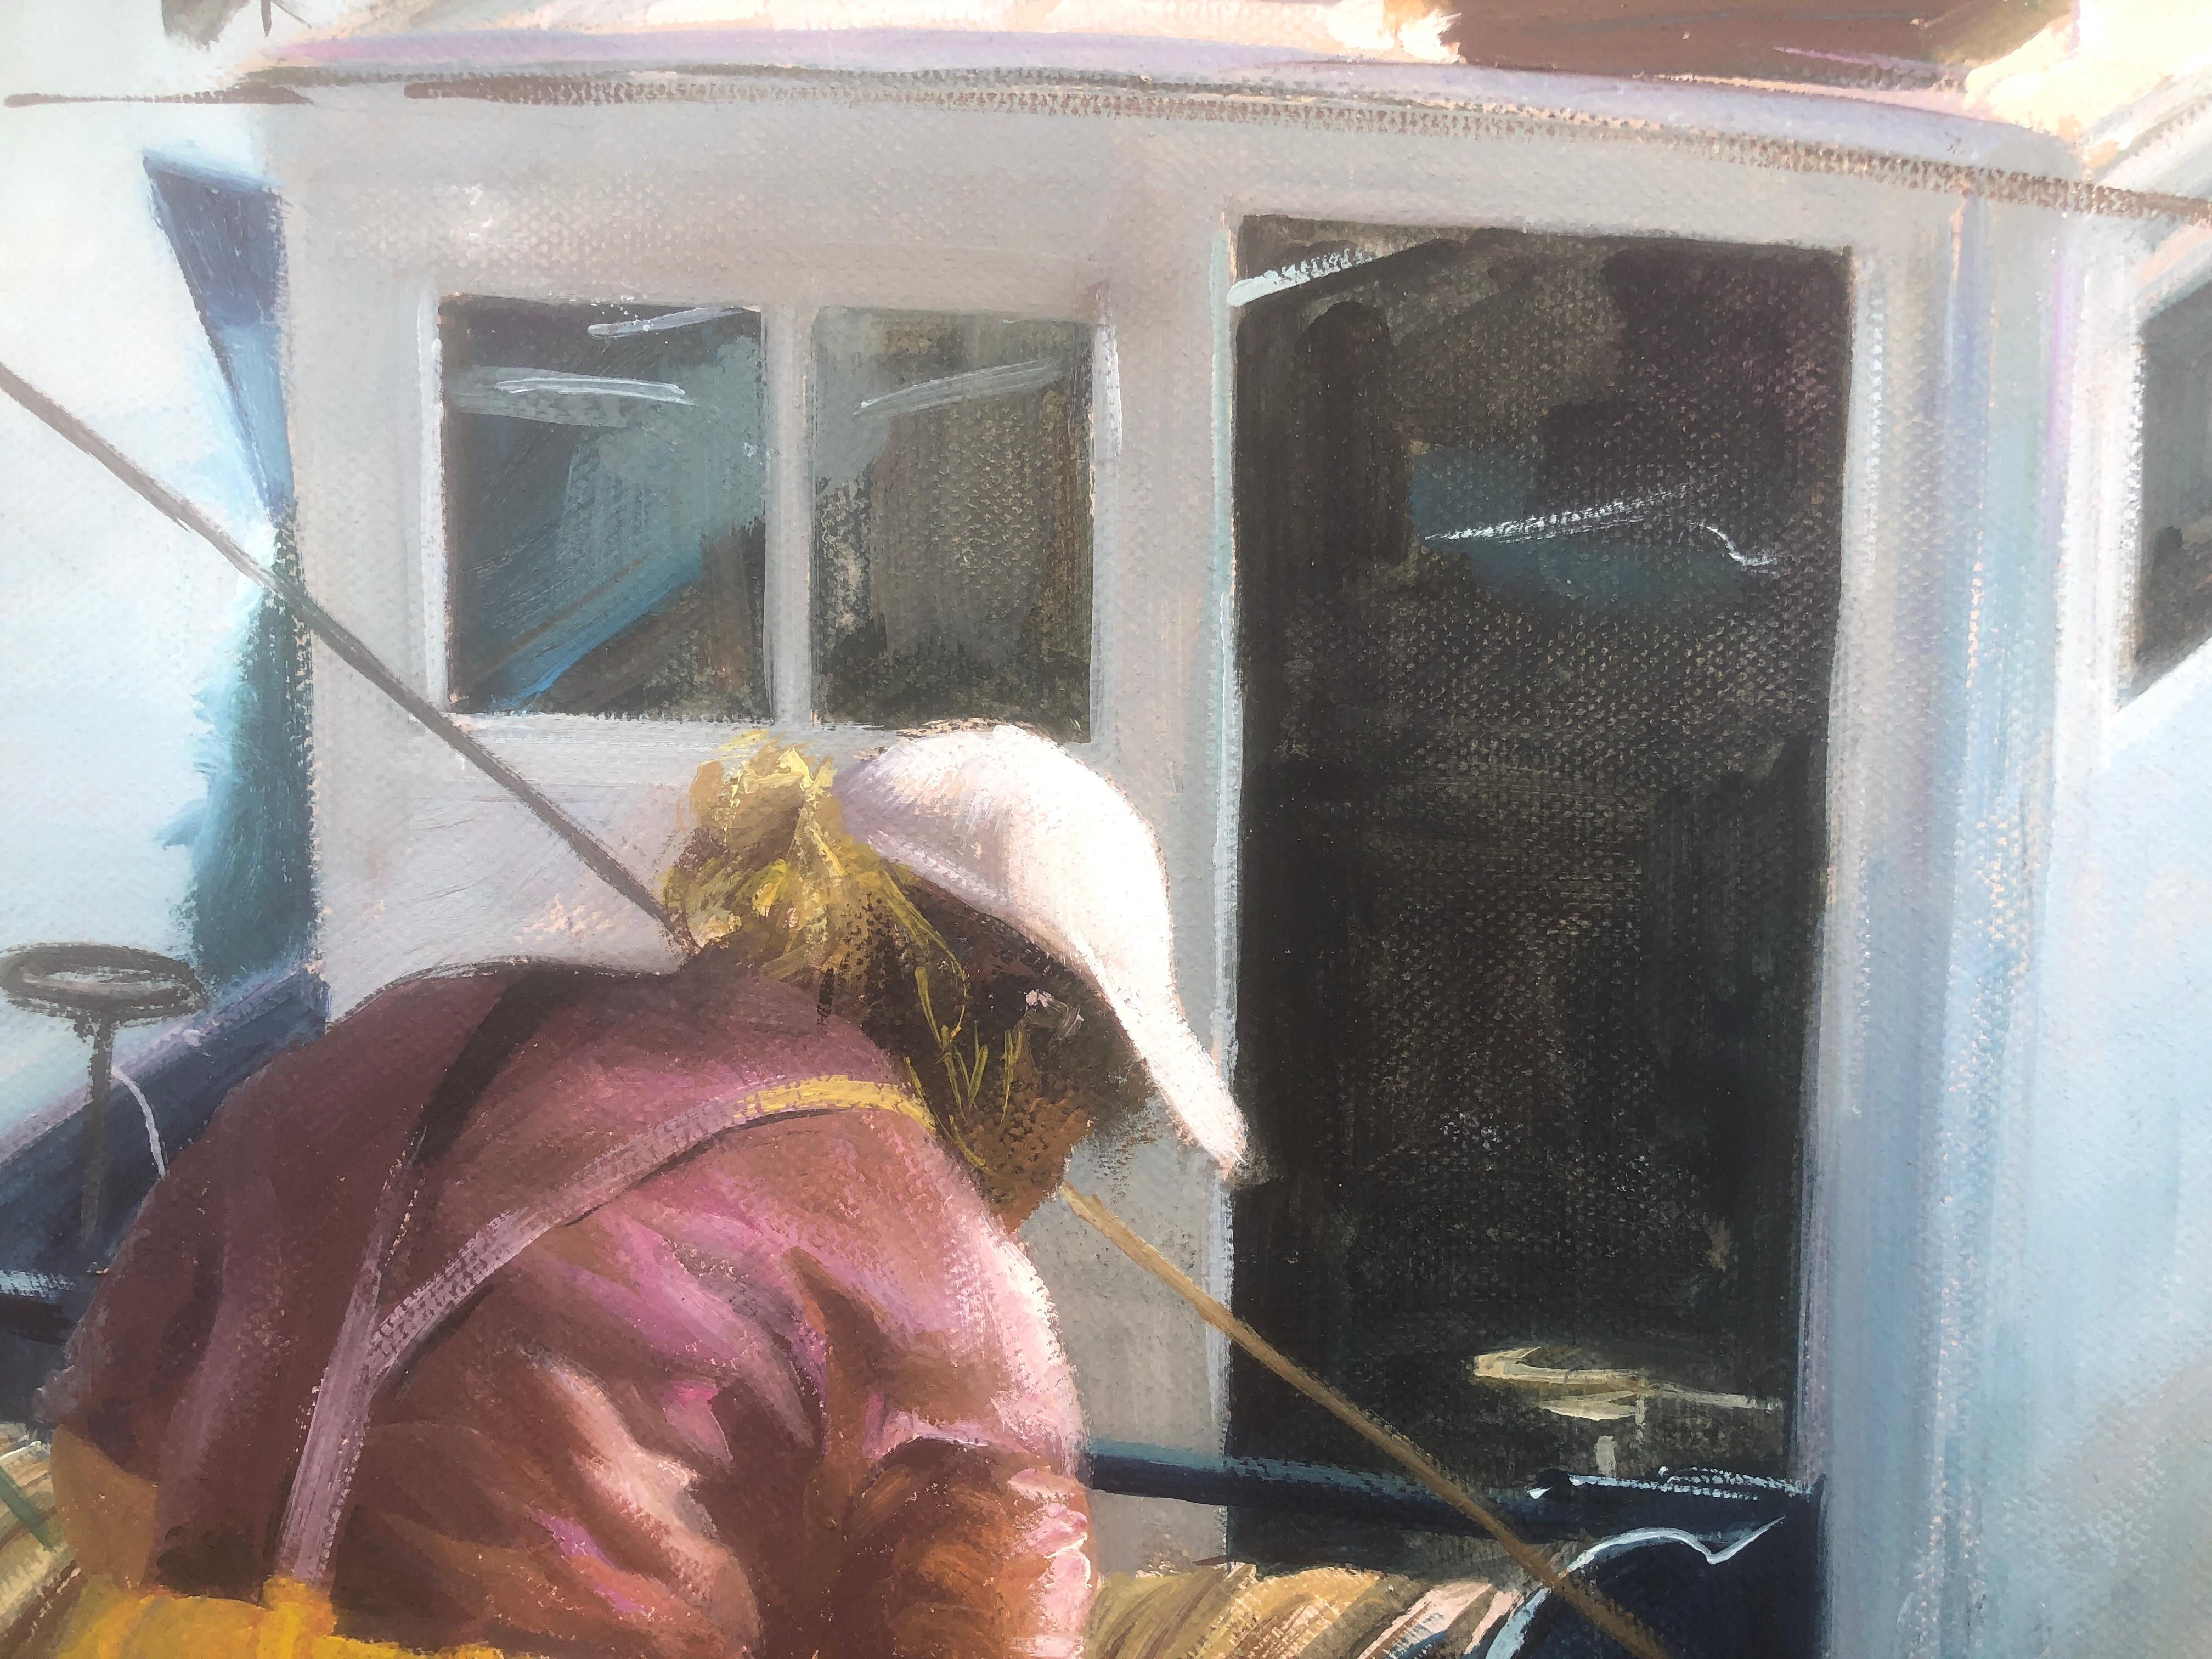 Sailor fisherman in his boat Spain oil on canvas painting seascape - Photorealist Painting by Domingo Alvarez Gomez